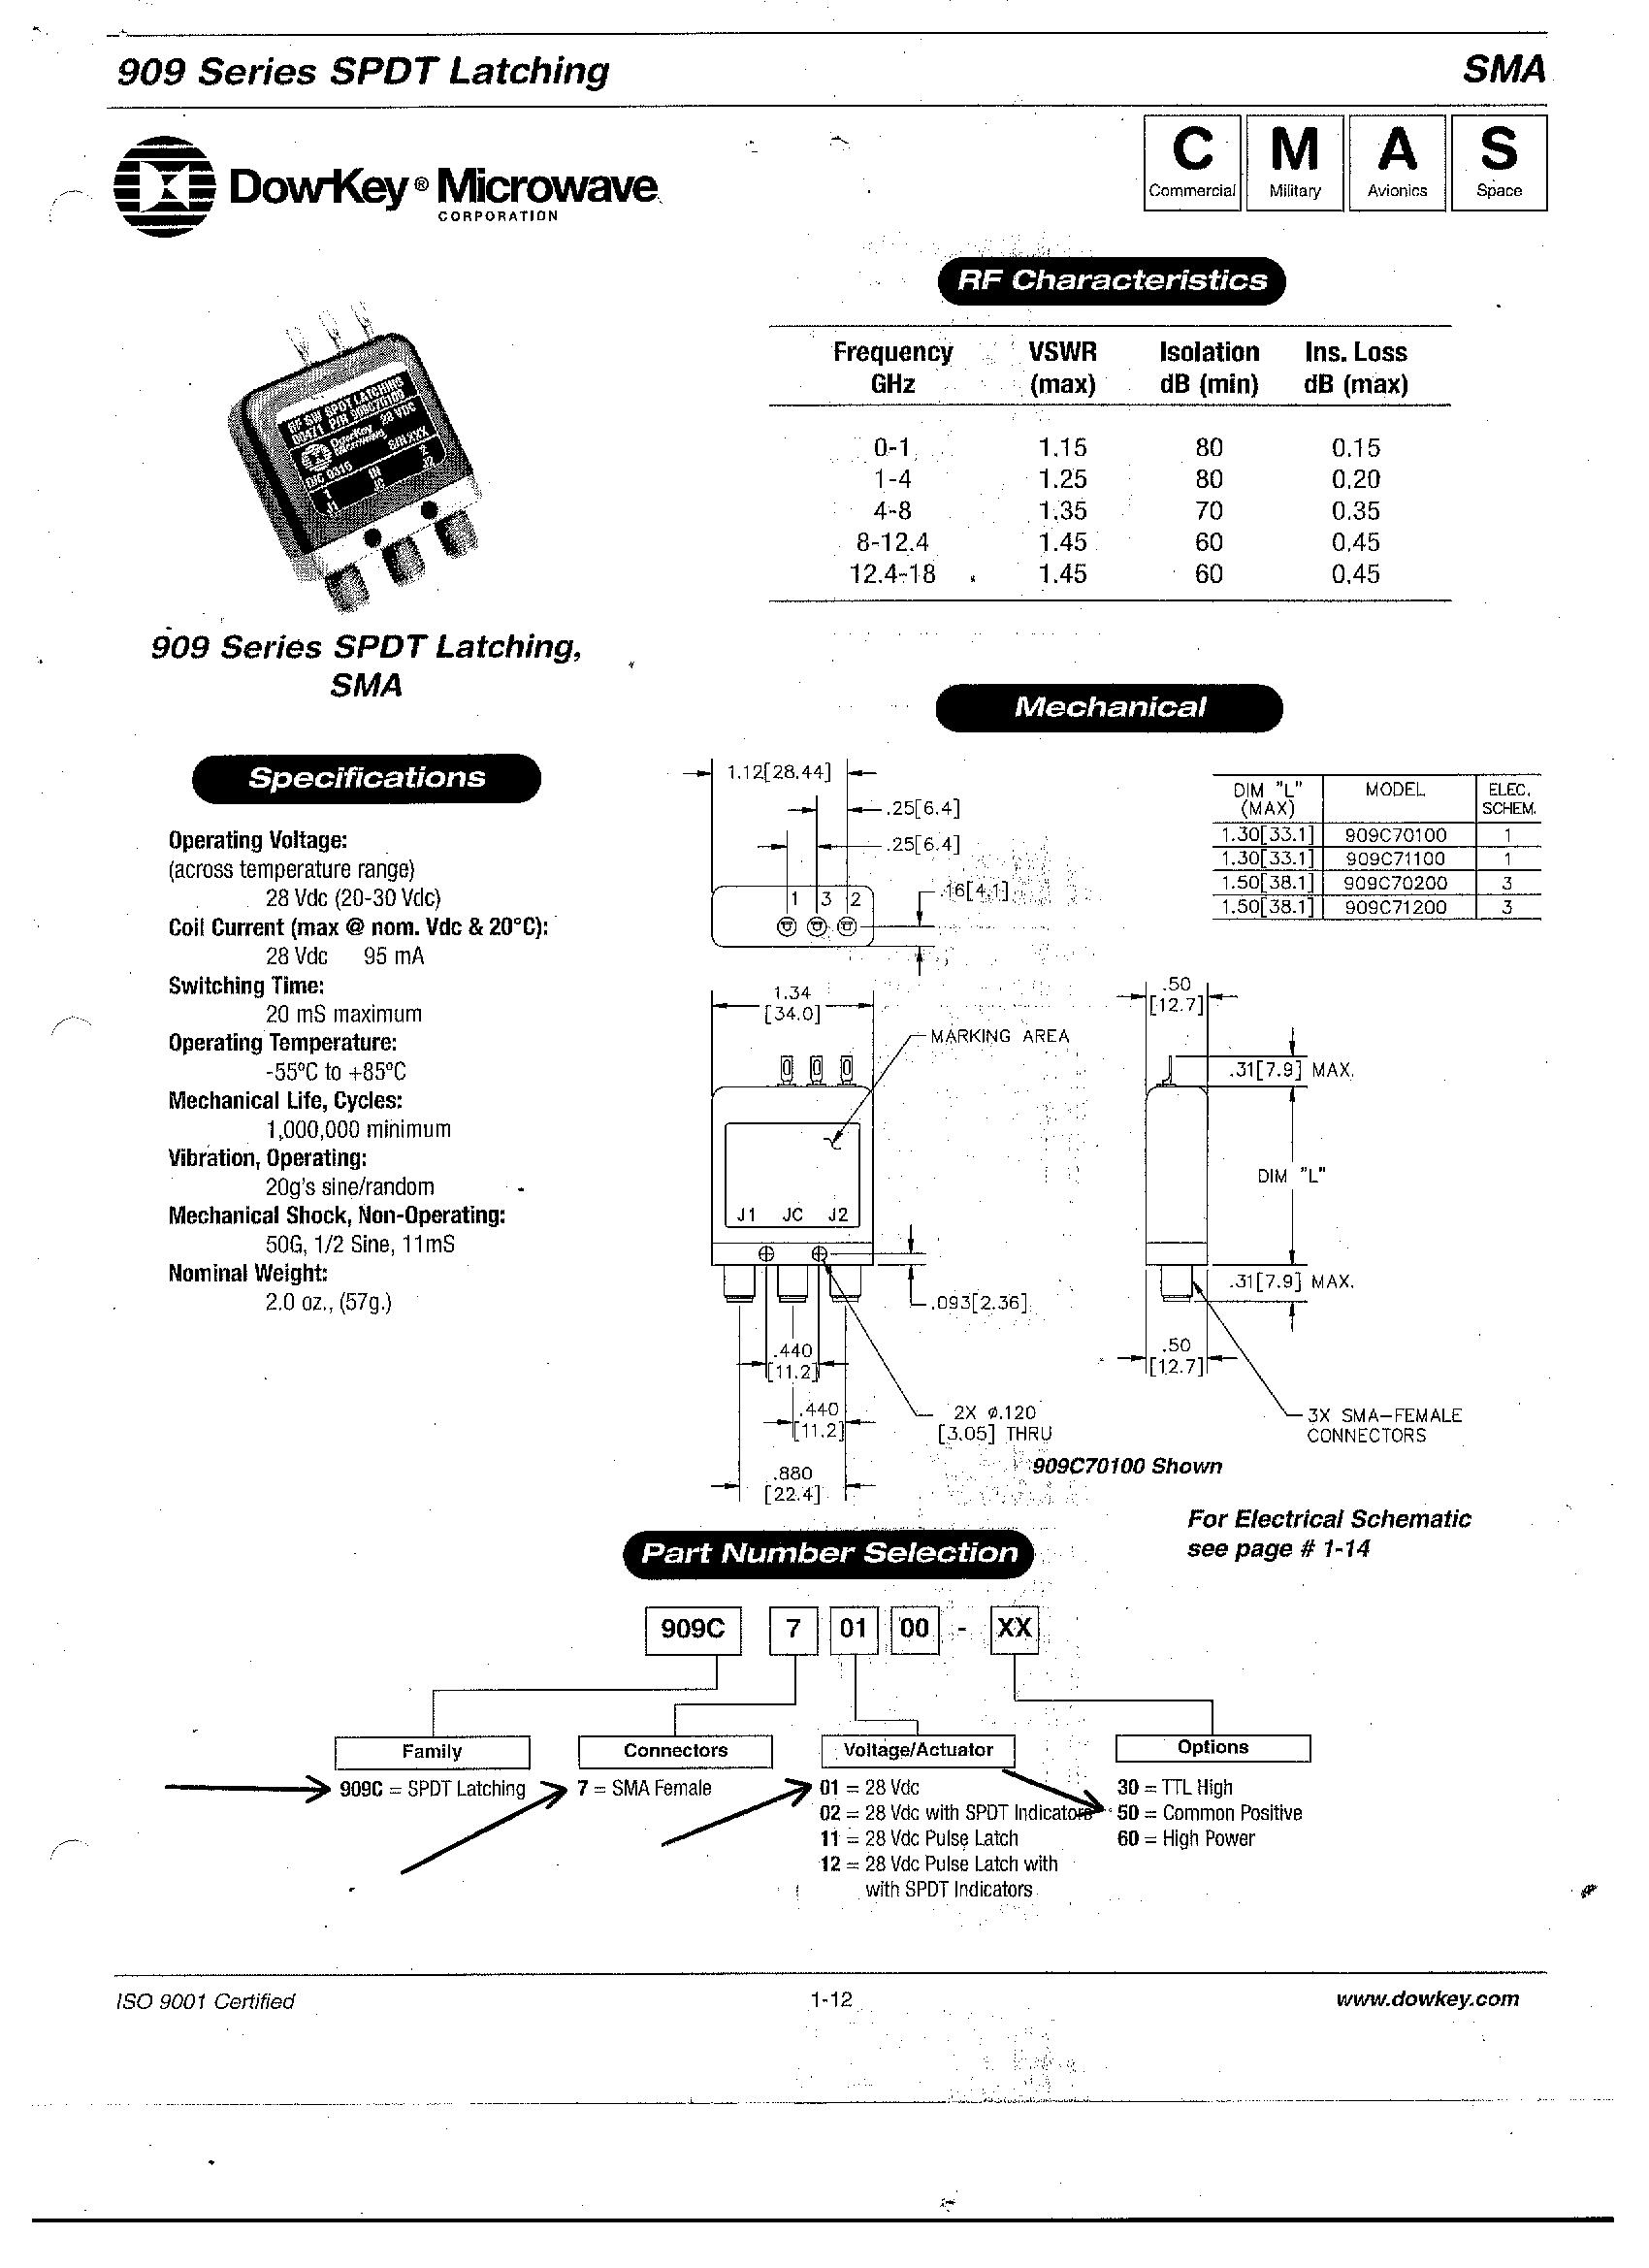 Relay Transco 18 GHz 28V DC 82152-909C70100 